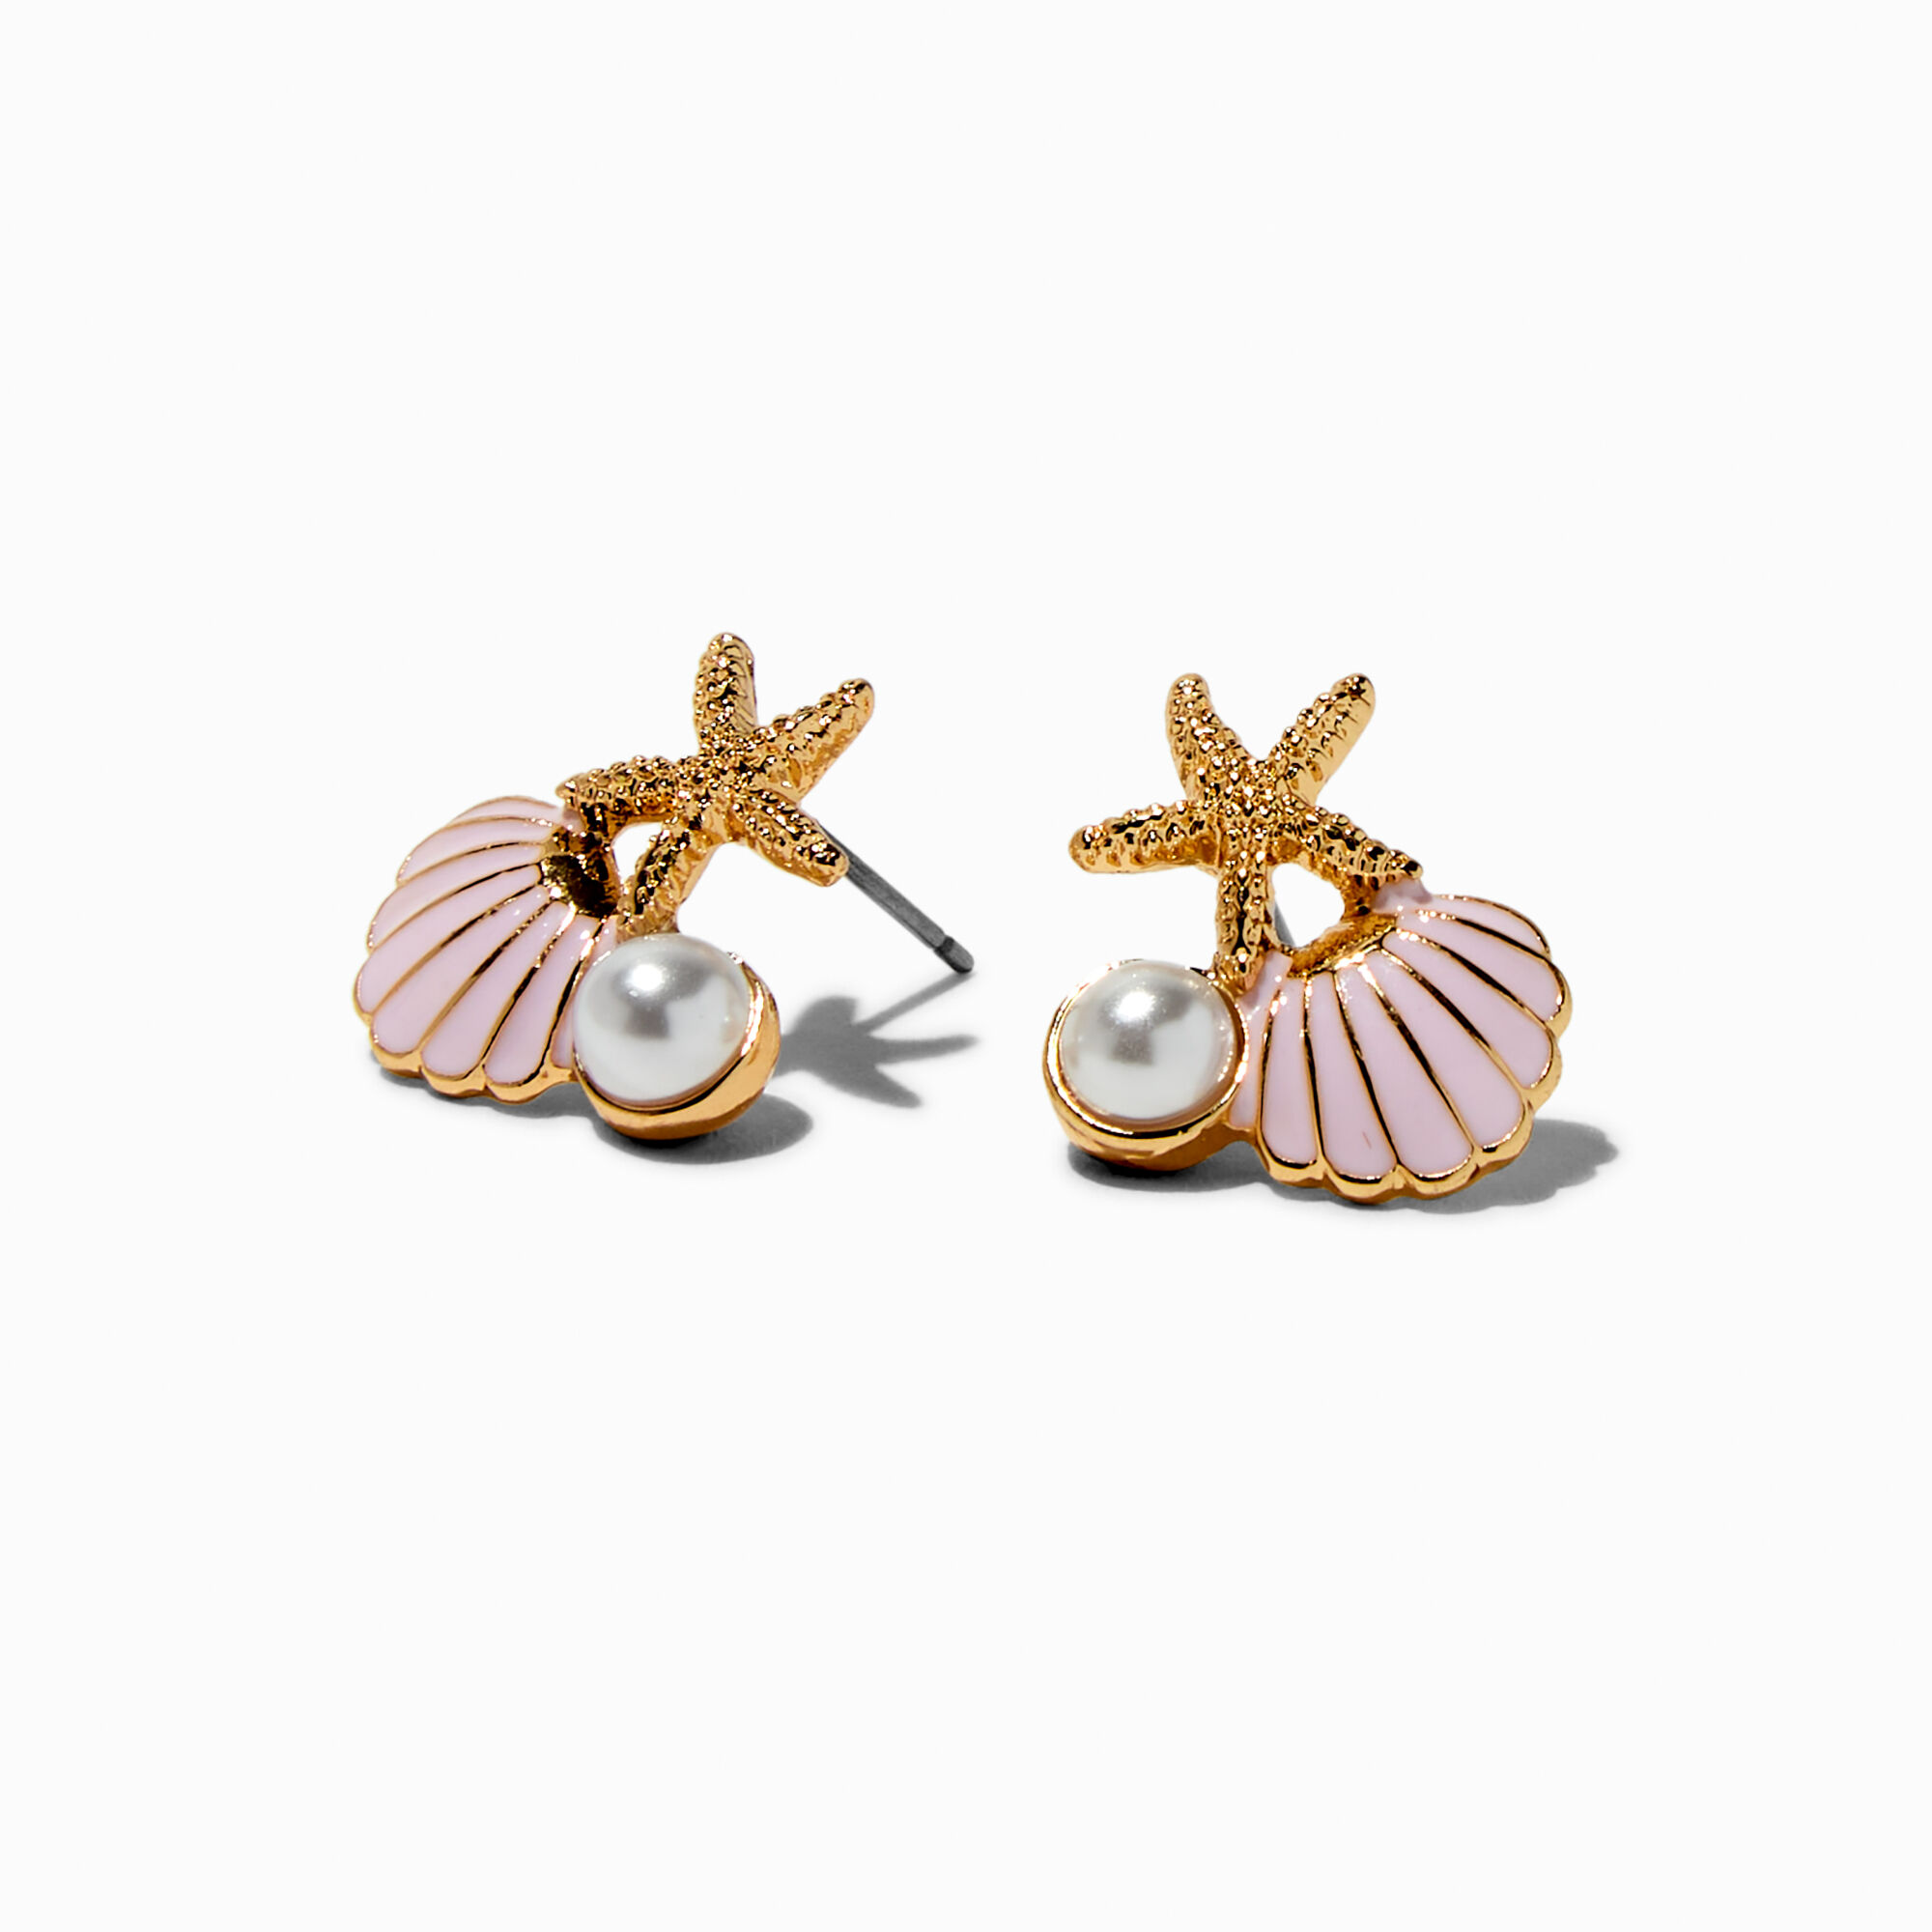 View Claires Ocean Treasures Stud Earrings Gold information